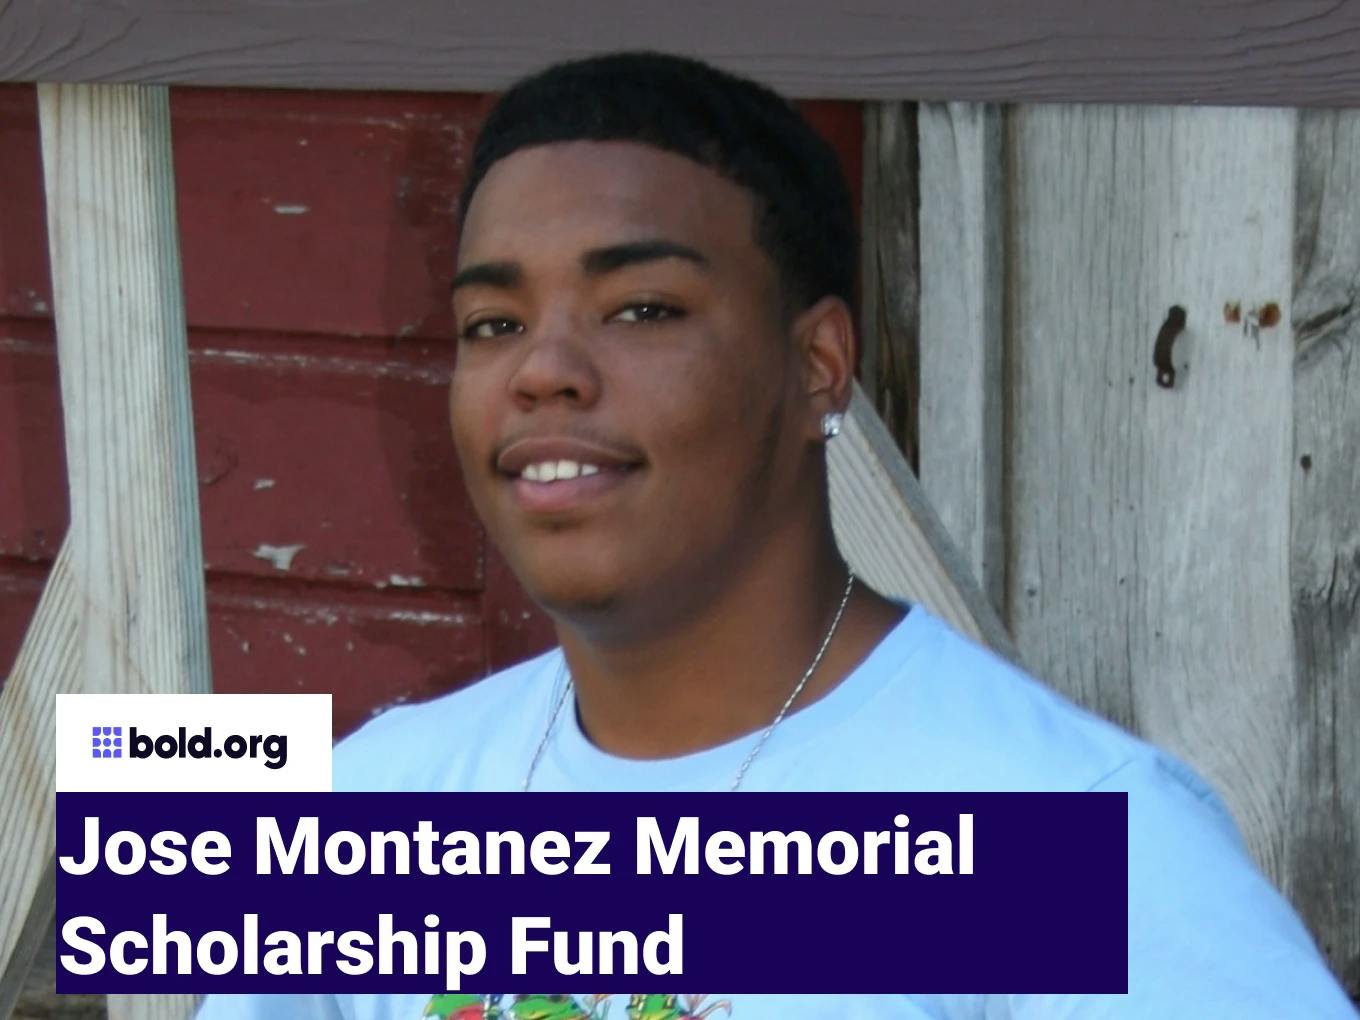 Jose Montanez Memorial Scholarship Fund